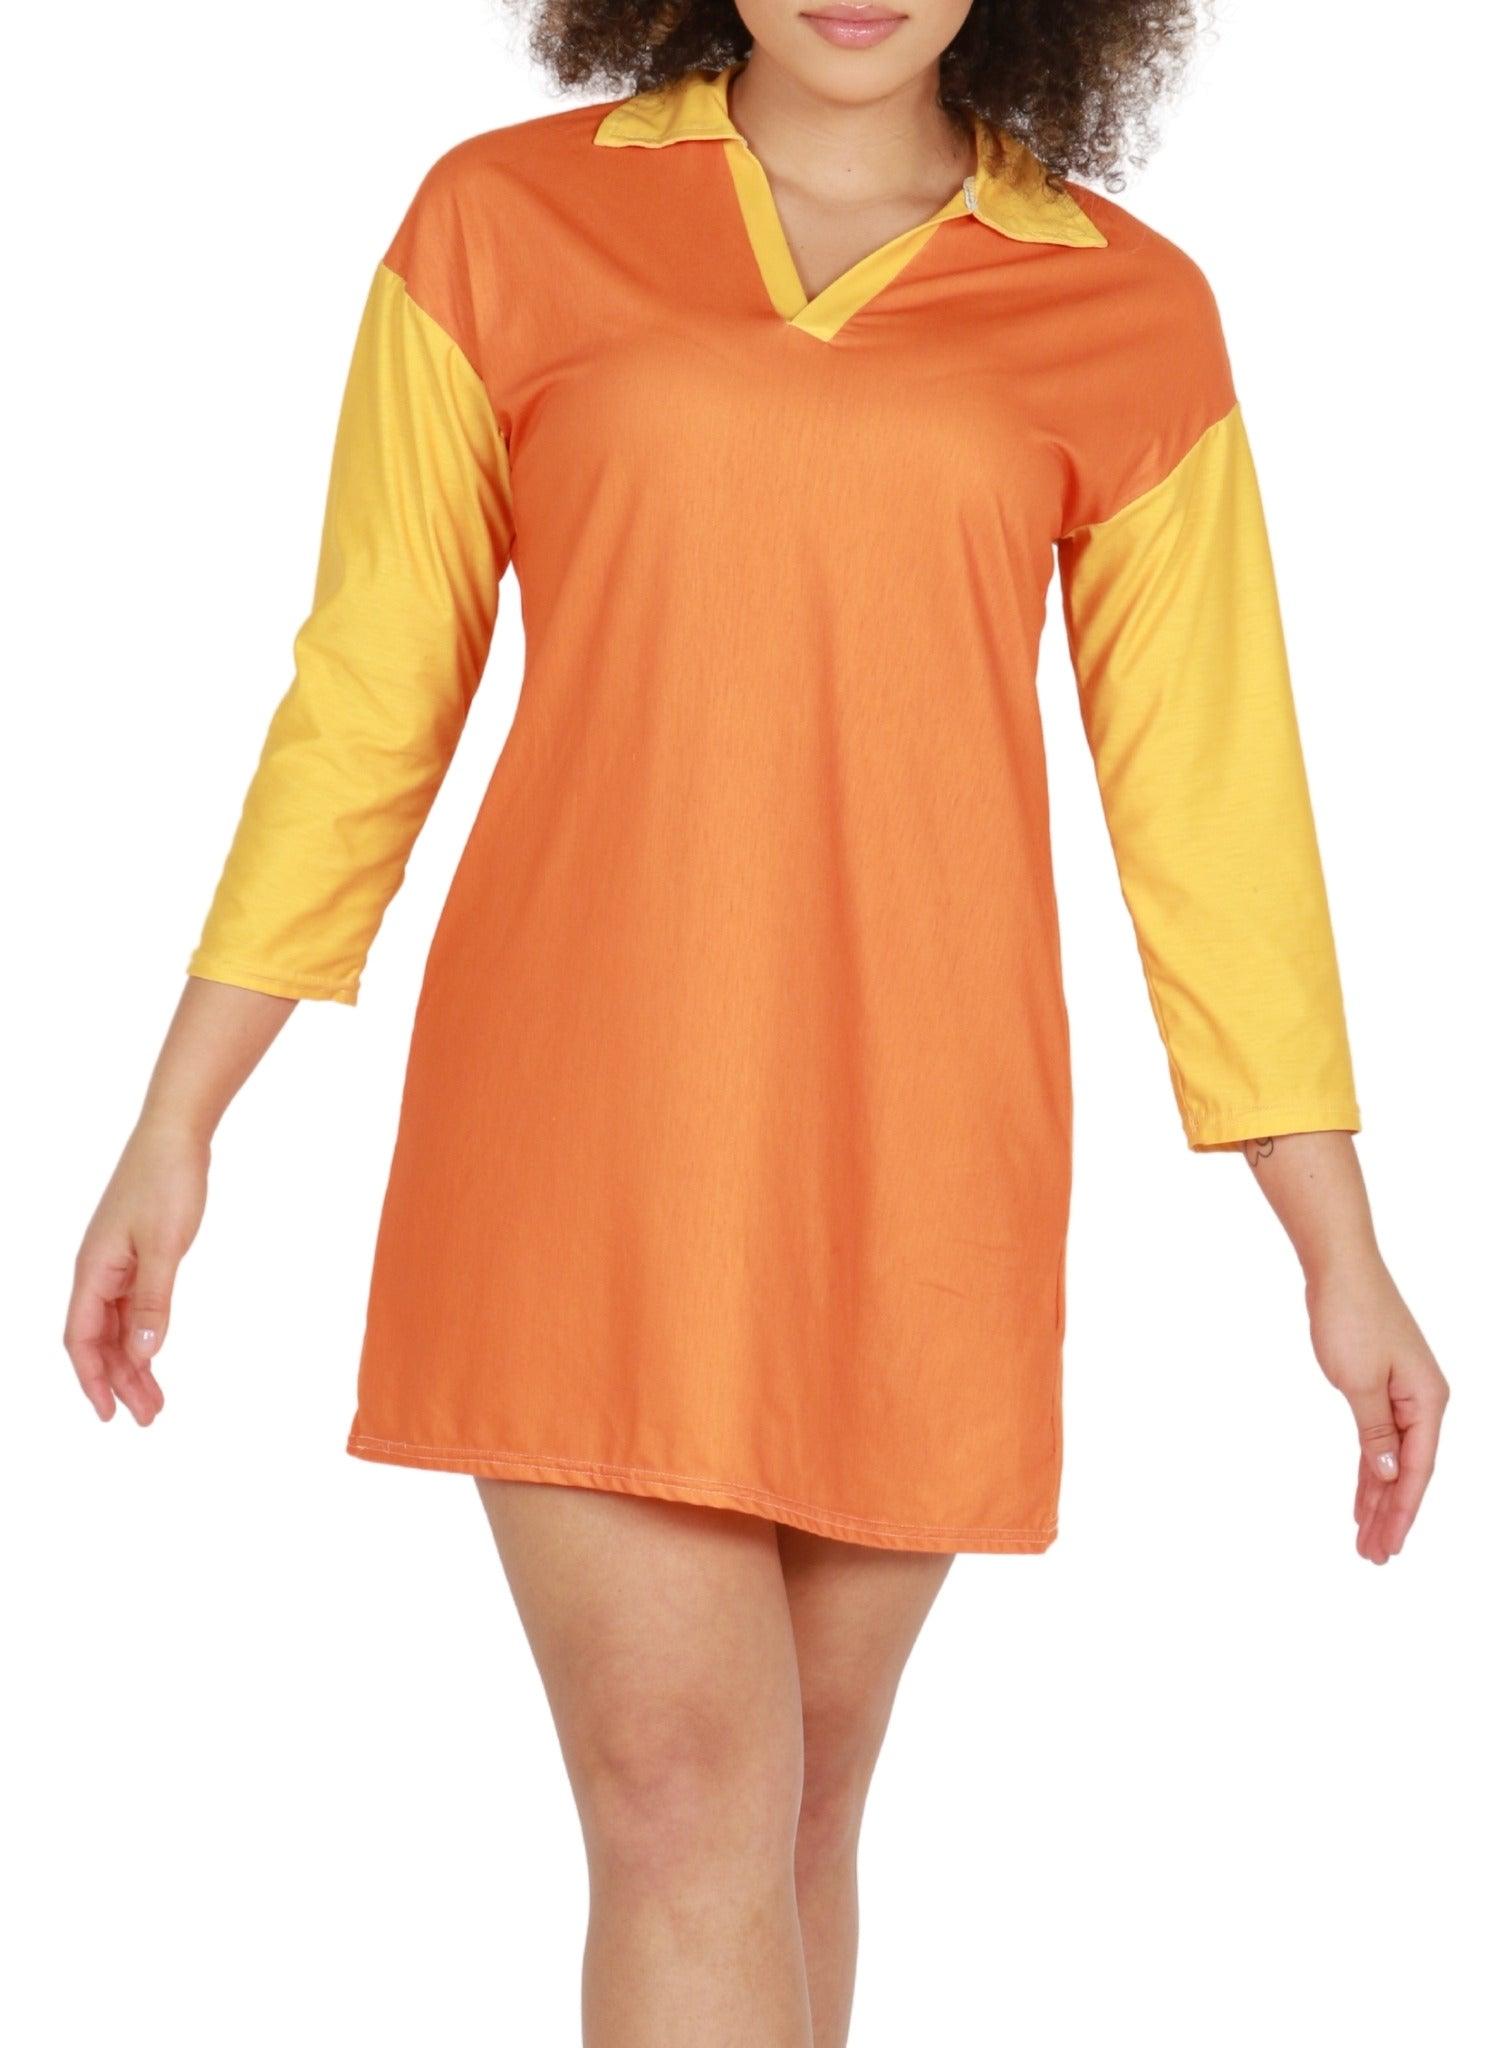 All-Over Print Women's Shallow V-Neck Drop-Shoulder Long Sleeves Blouse - Blissfully Brand